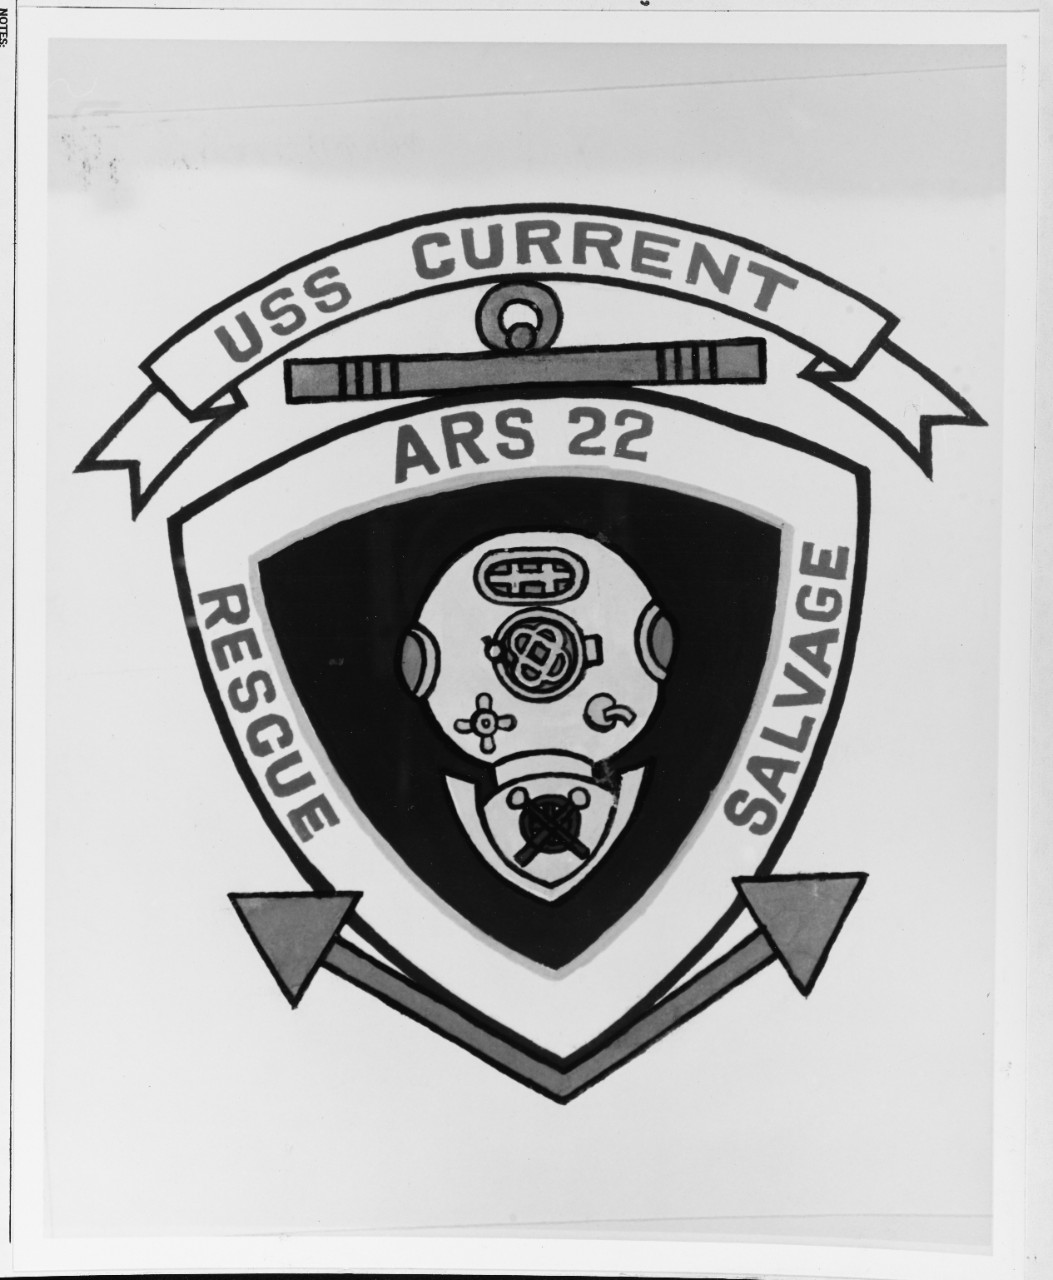 Insignia: USS CURRENT (ARS-22)